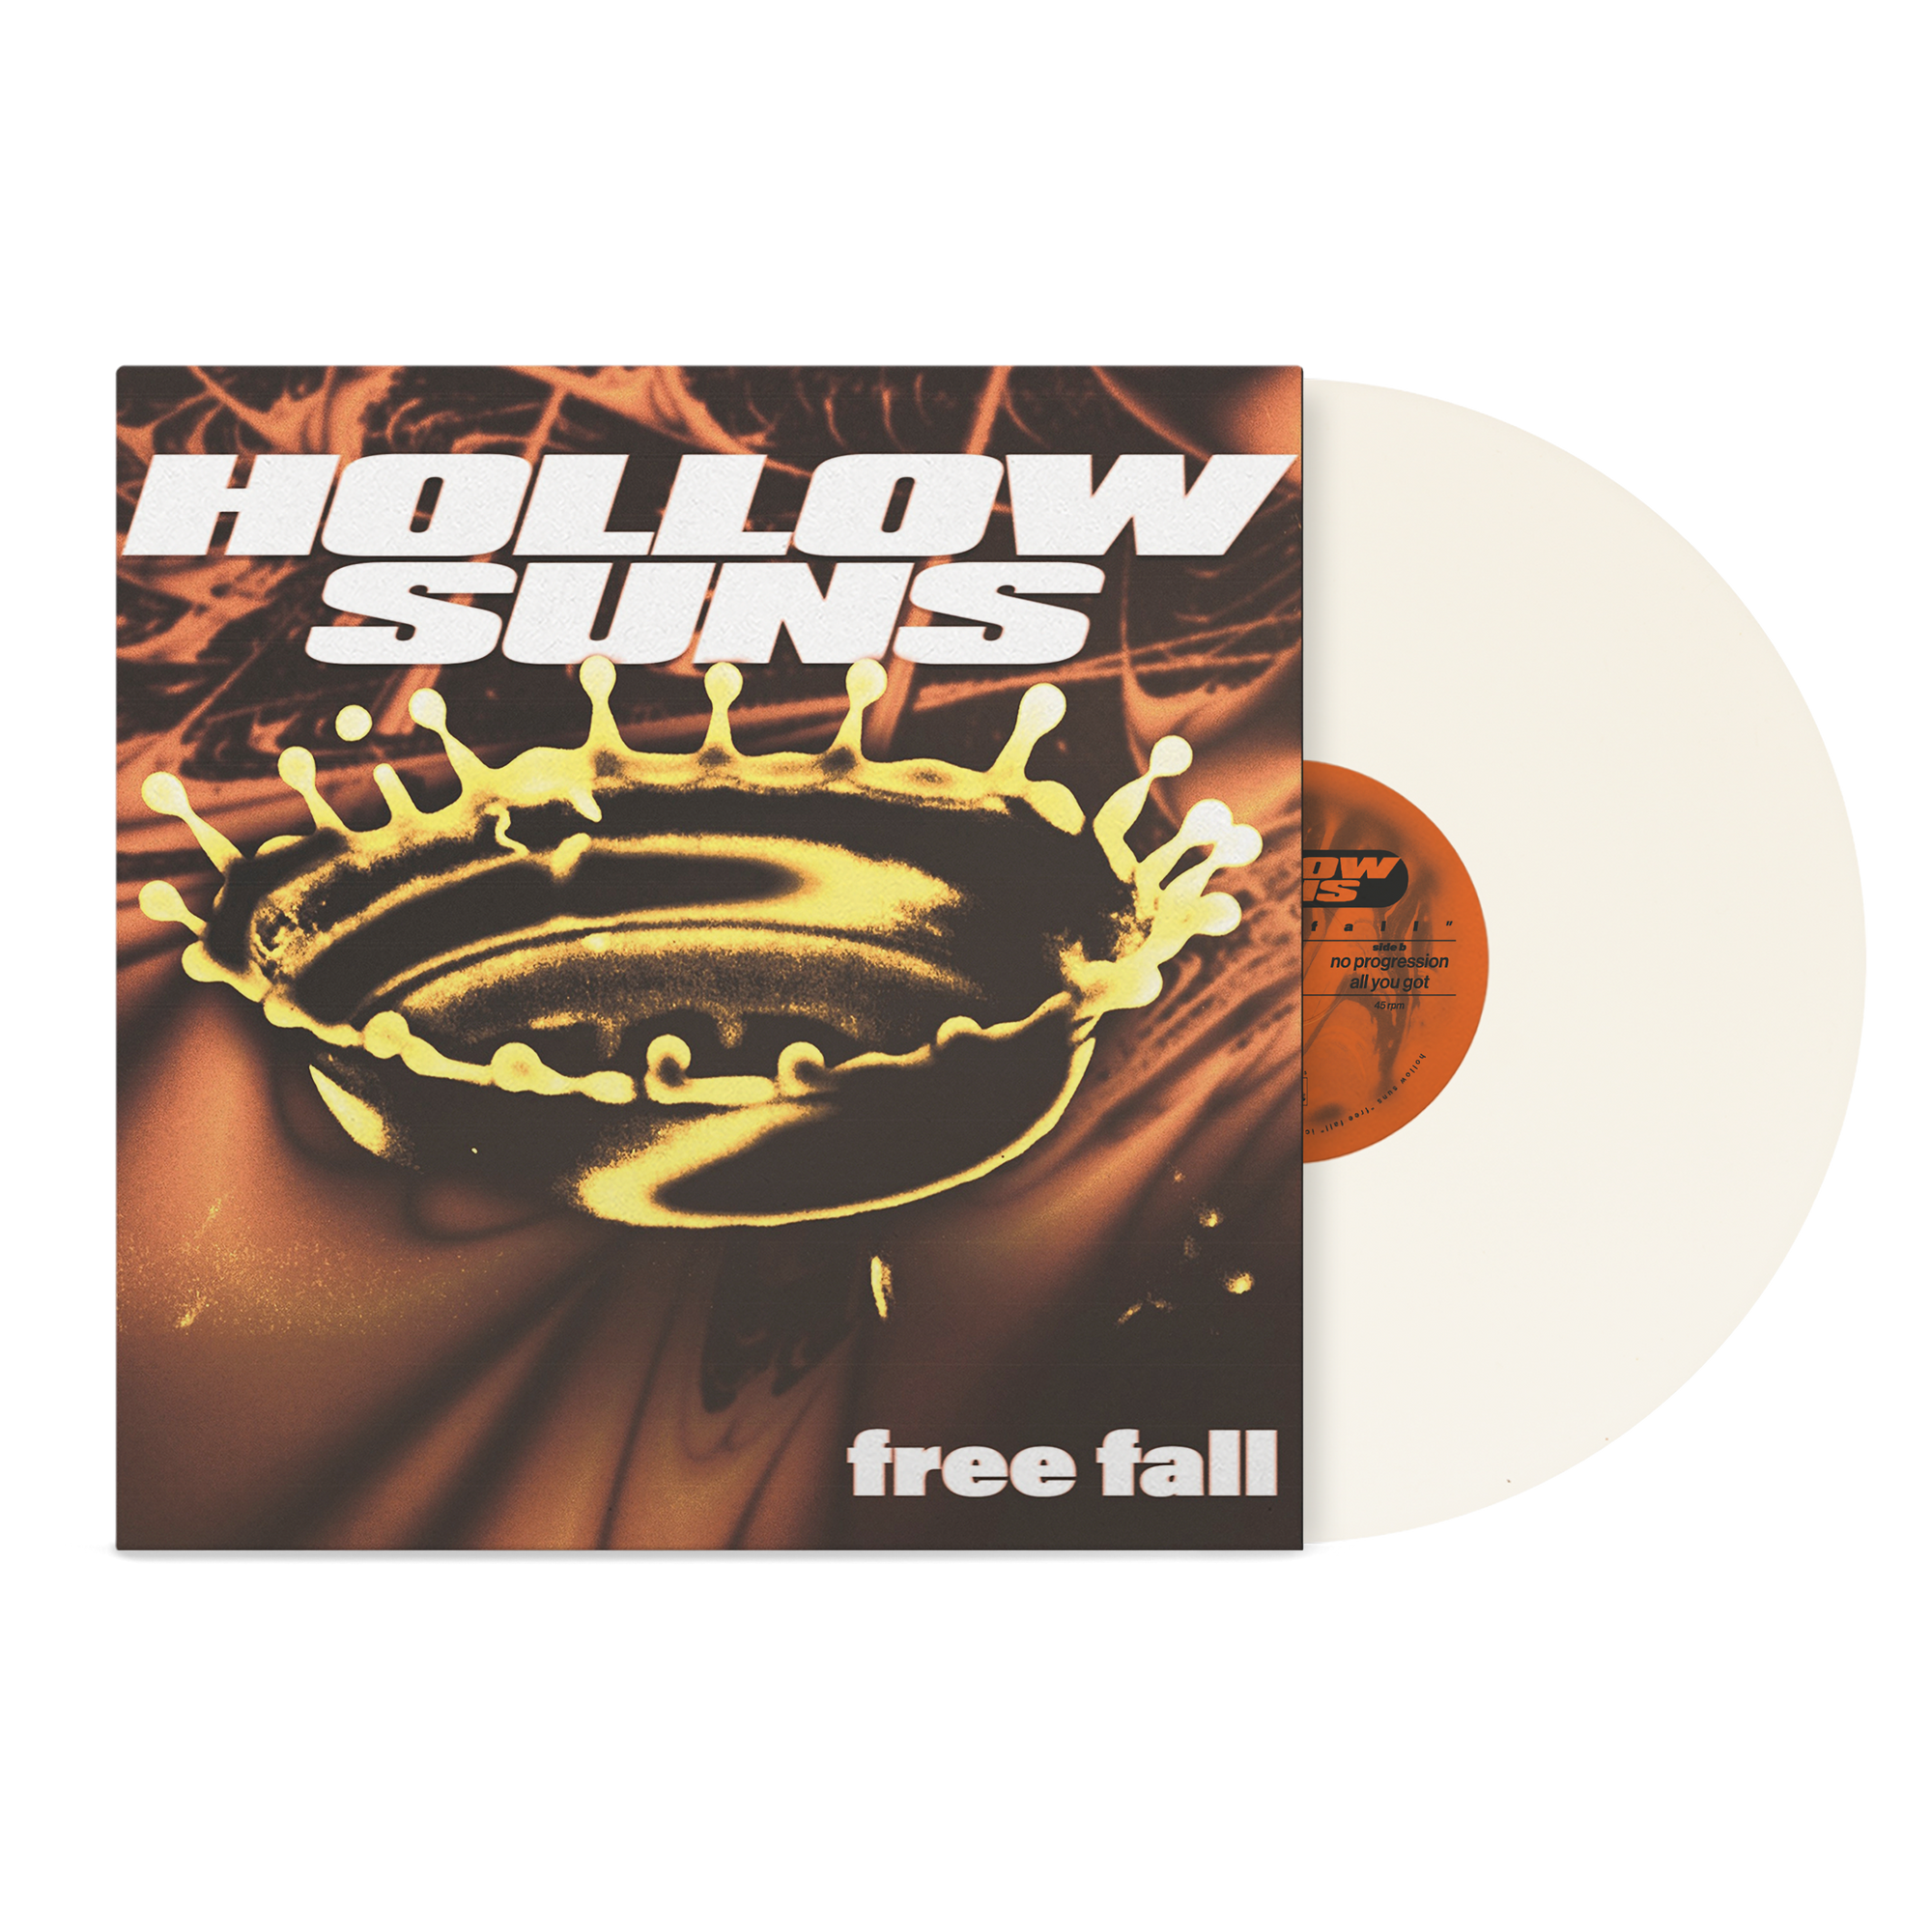 Hollow Suns "Free Fall"